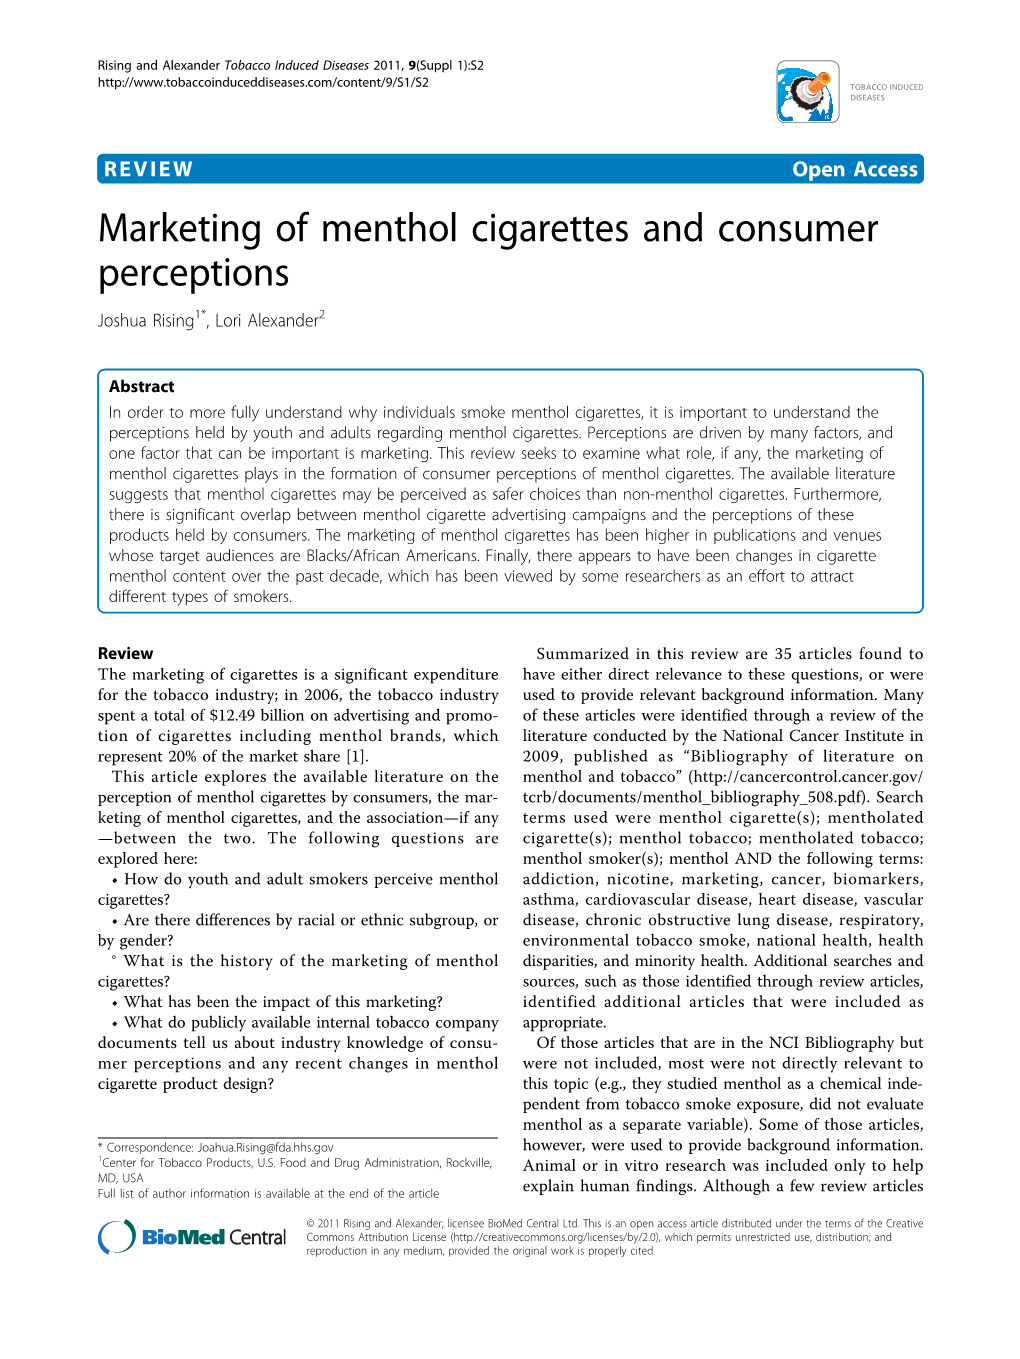 Marketing of Menthol Cigarettes and Consumer Perceptions Joshua Rising1*, Lori Alexander2